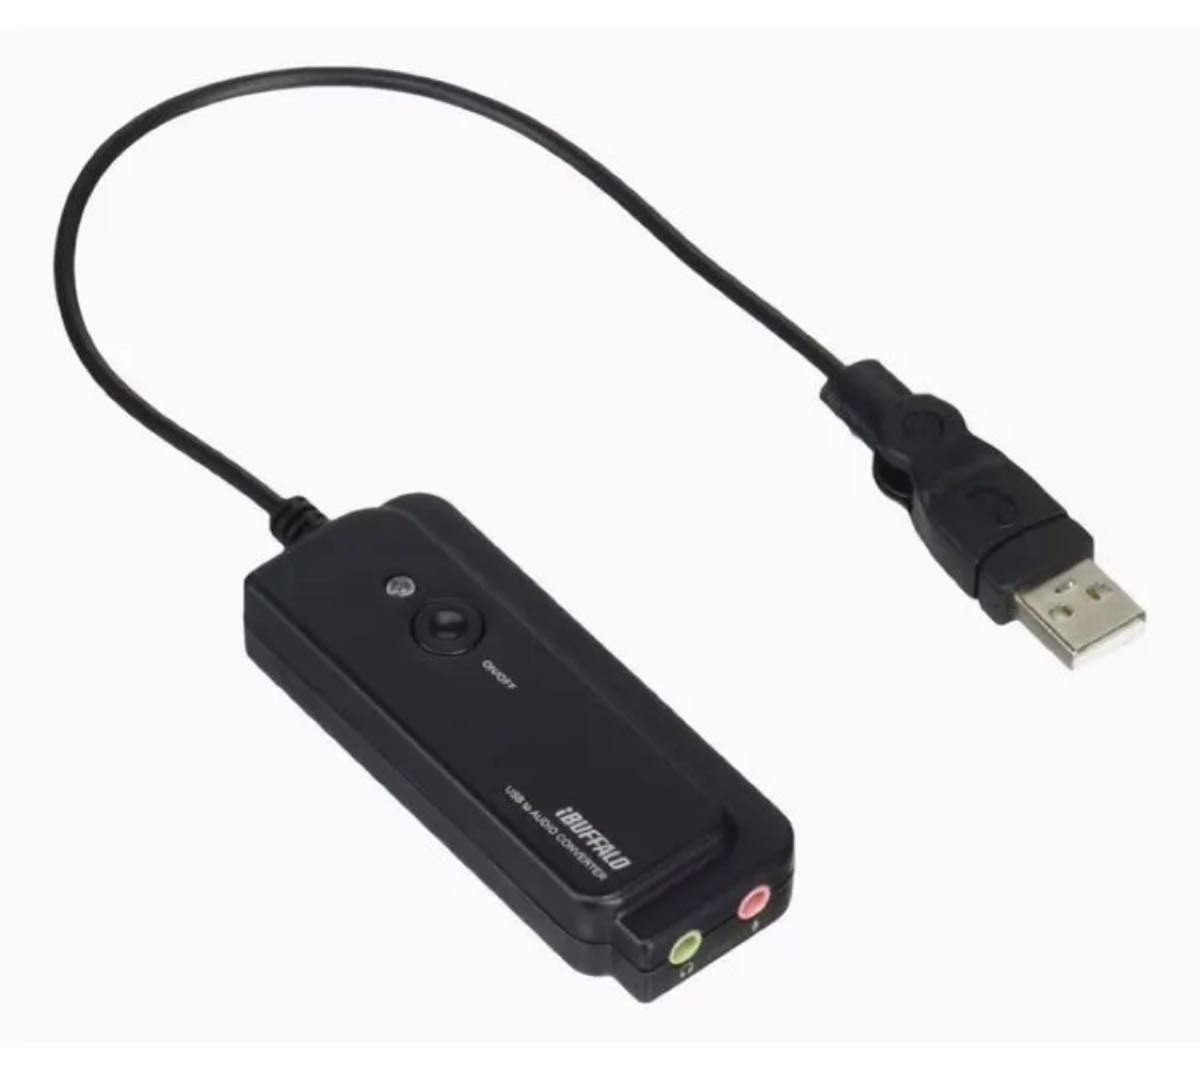 EmkayヘッドセットとUSBオーディオ変換ケーブル(USB A to 3.5mmステレオミニプラグ)